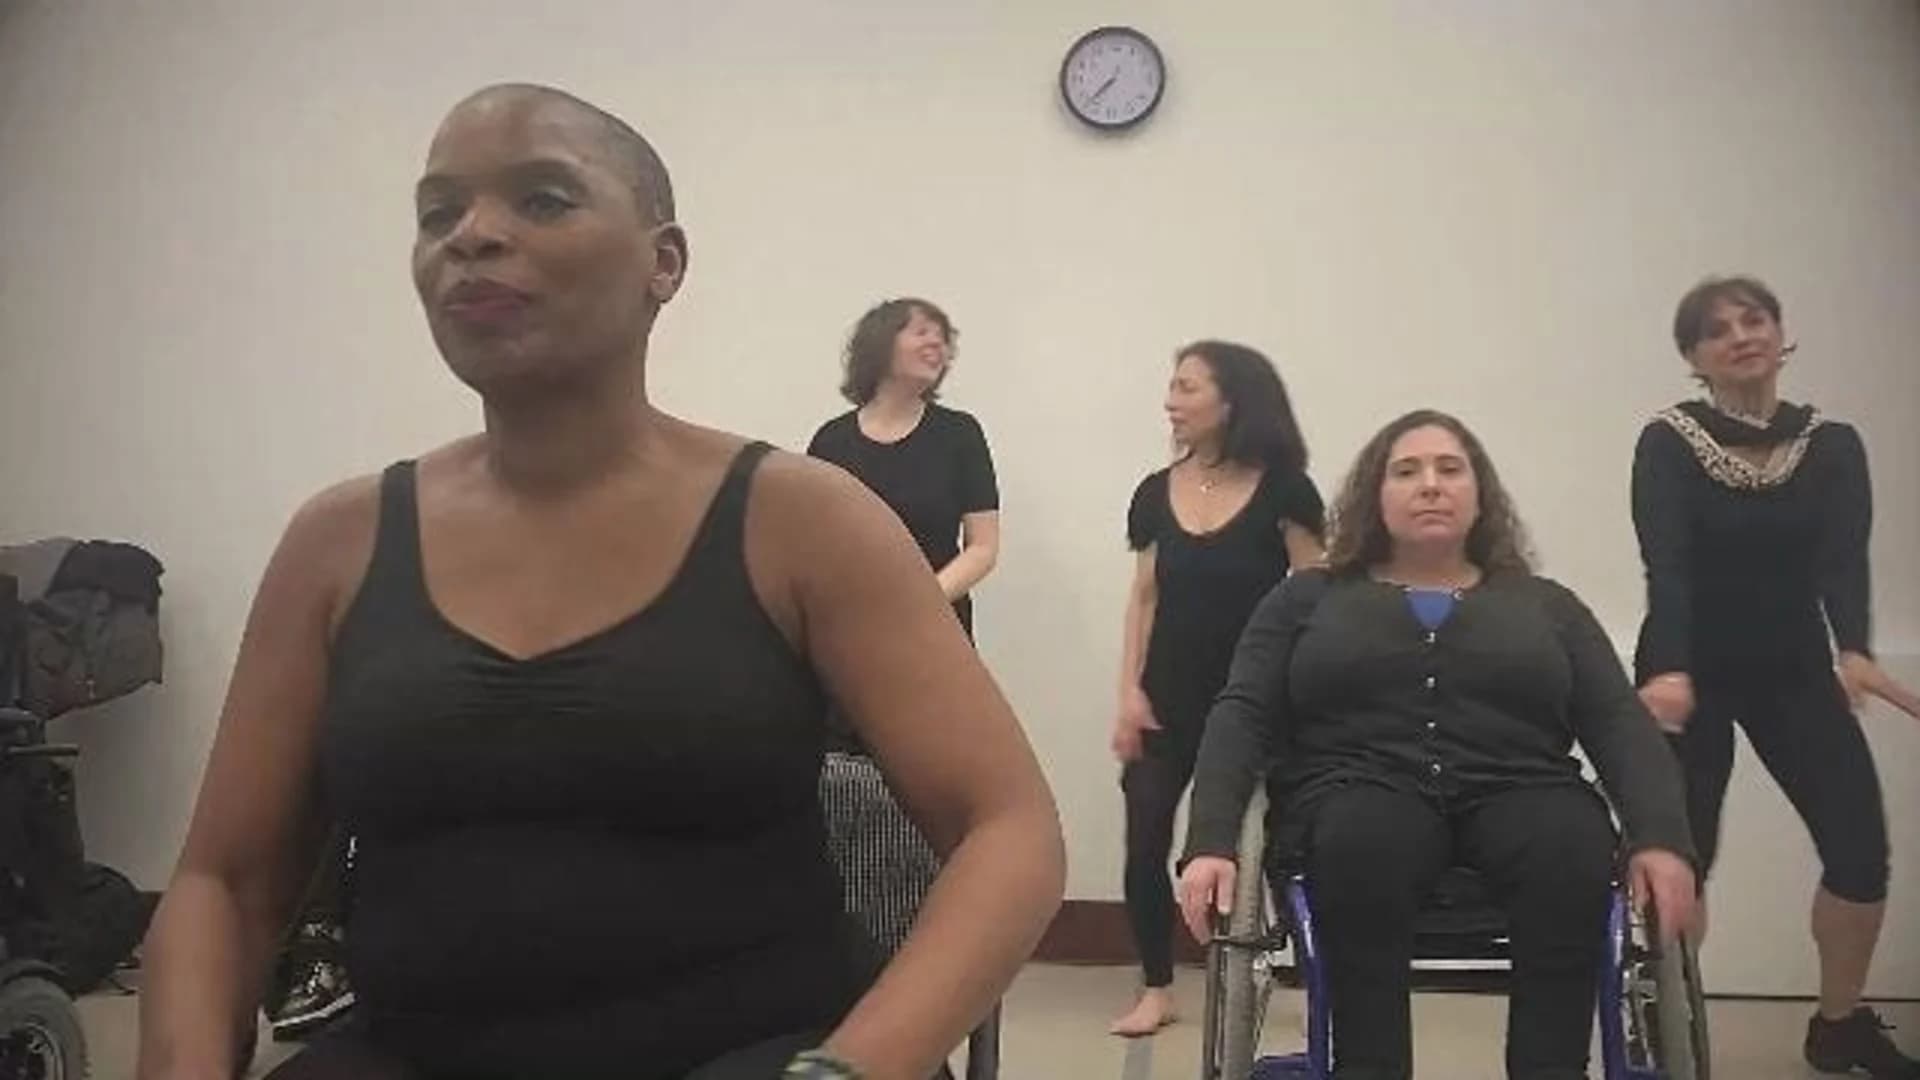 Dancing beyond disability: Brain tumor survivor helps people through dance